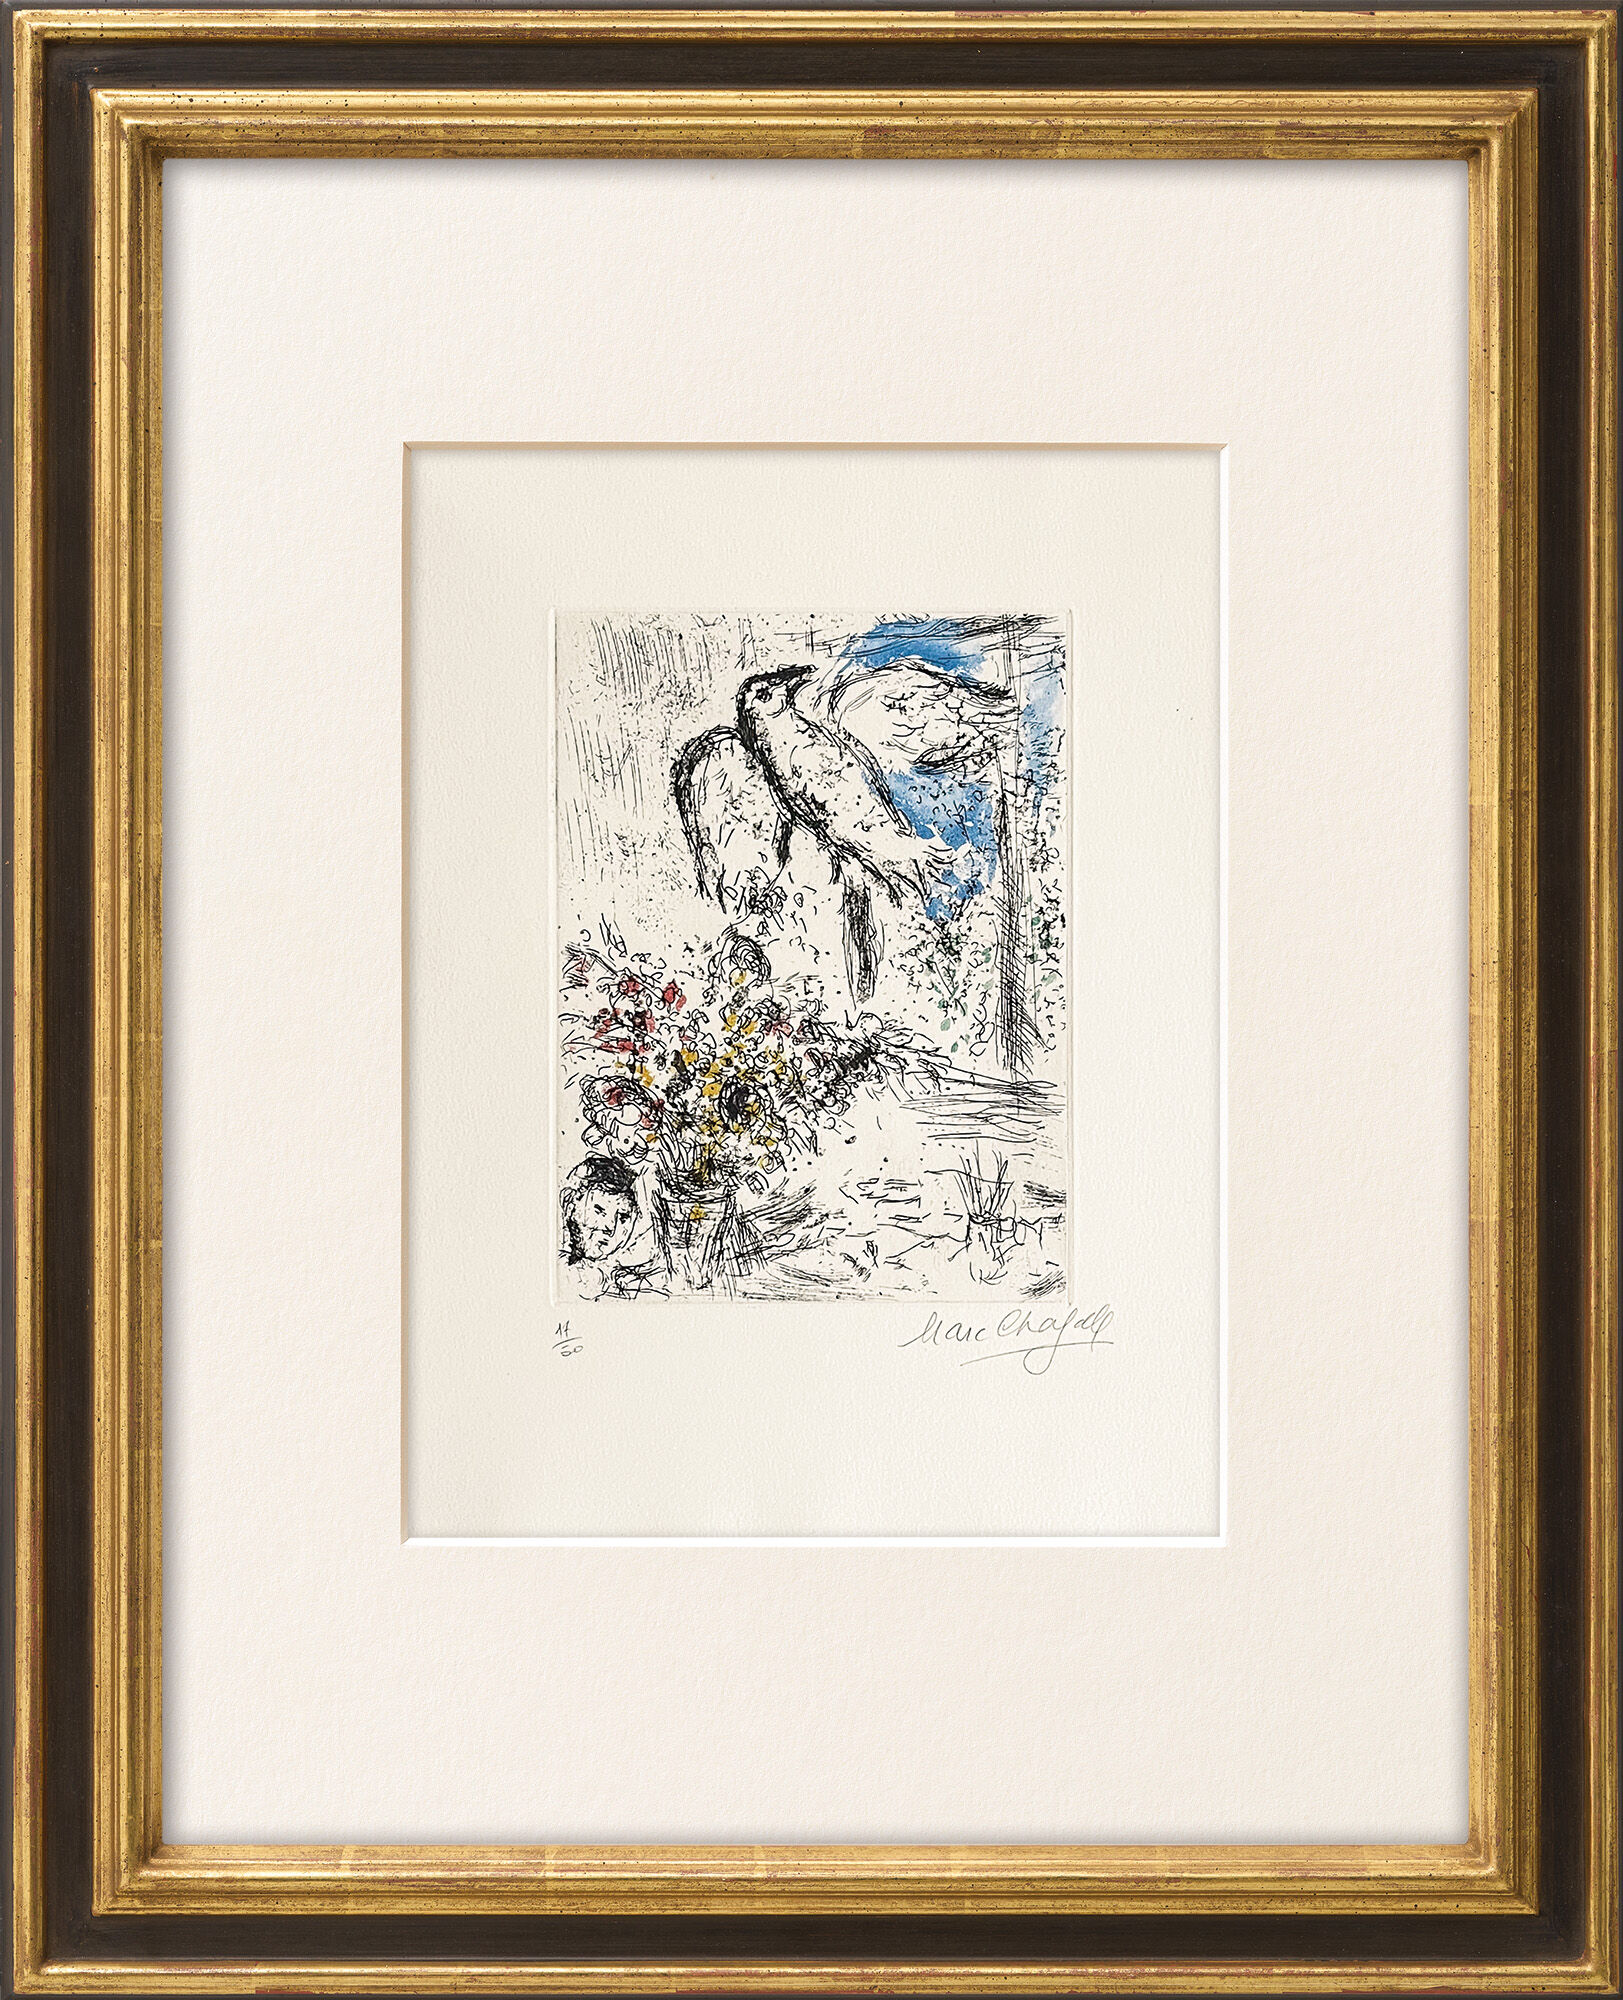 Picture "Nature morte au grand oiseau" (1968) by Marc Chagall